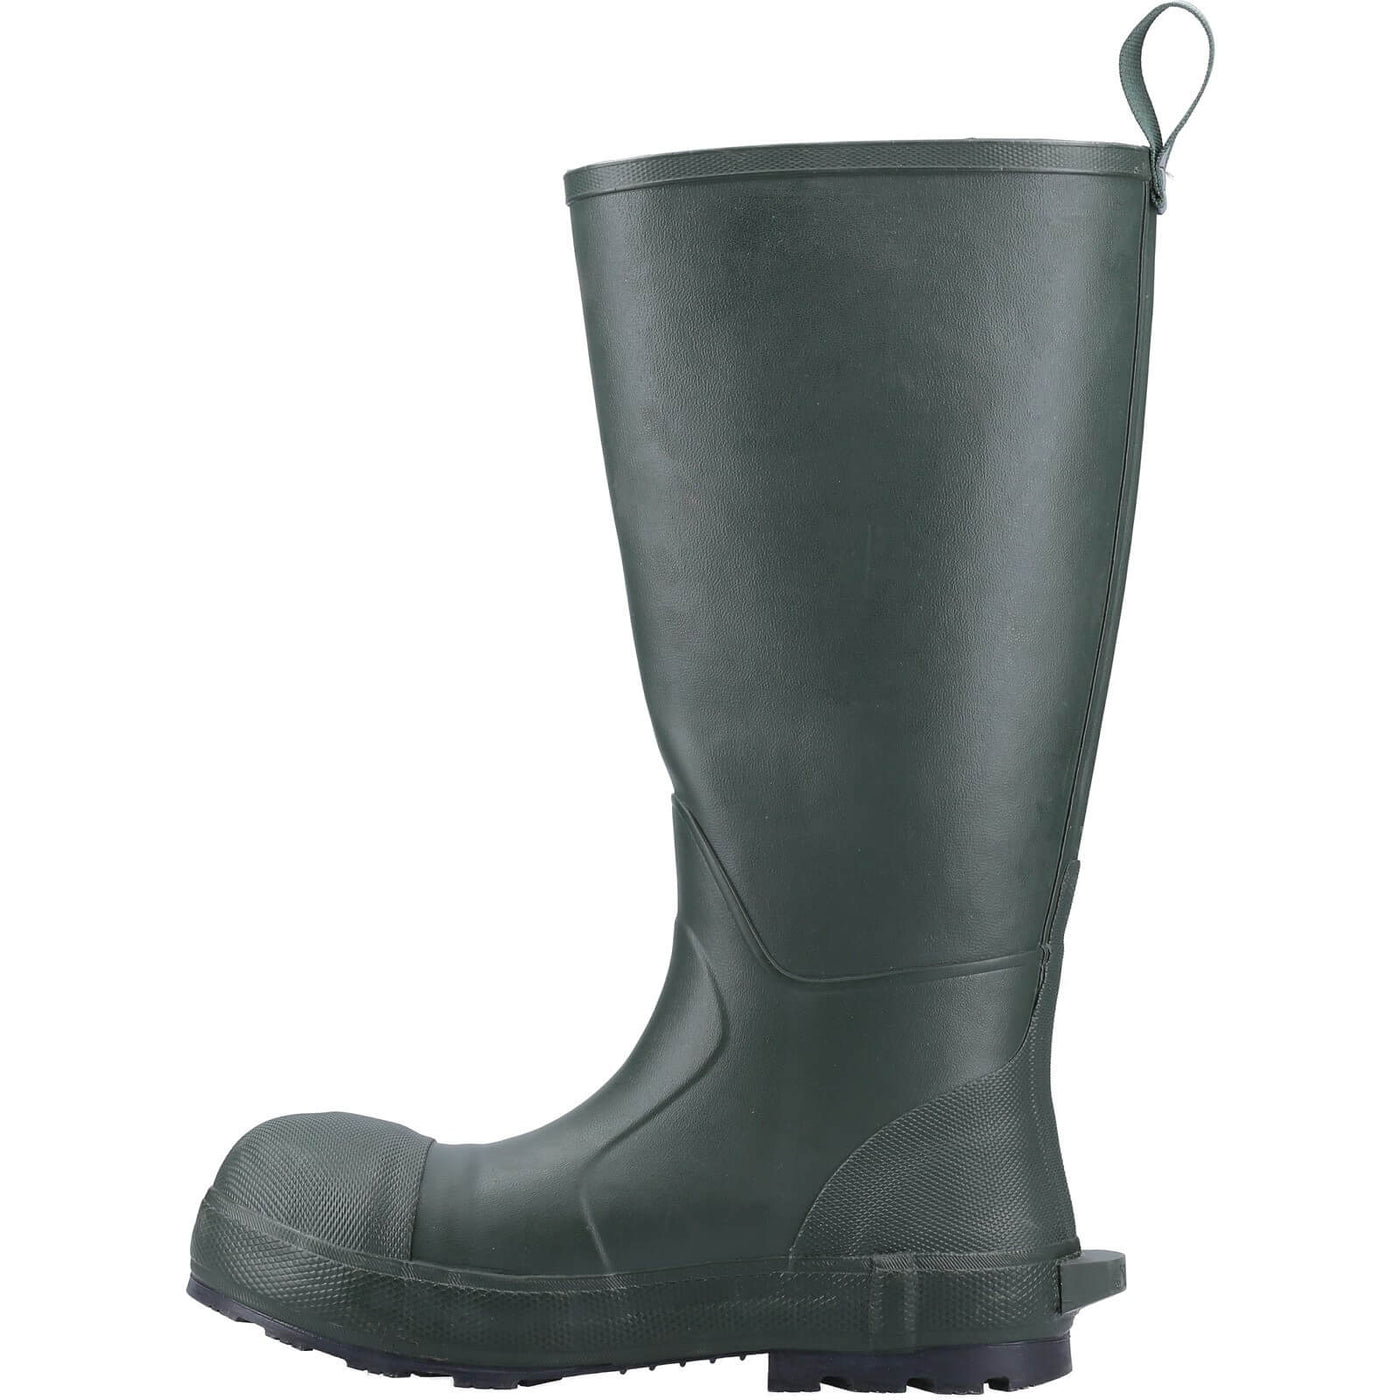 Muck Boots Mudder S5 Tall Safety Wellington Boots Moss 7#colour_moss-army-green